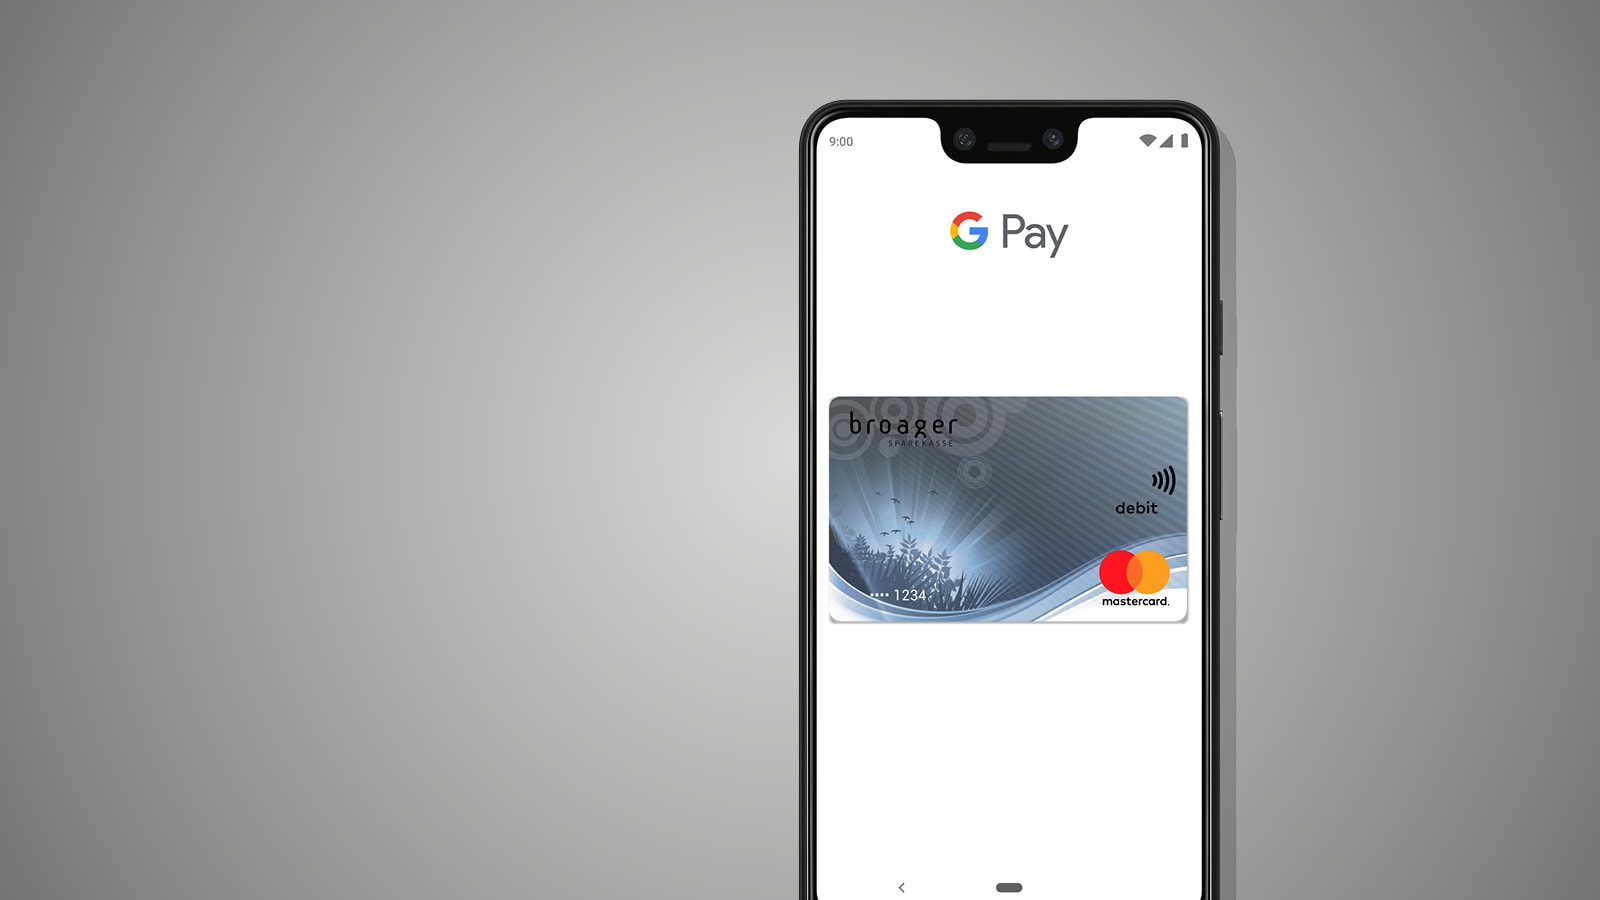 Google Pay i Broager Sparekasse